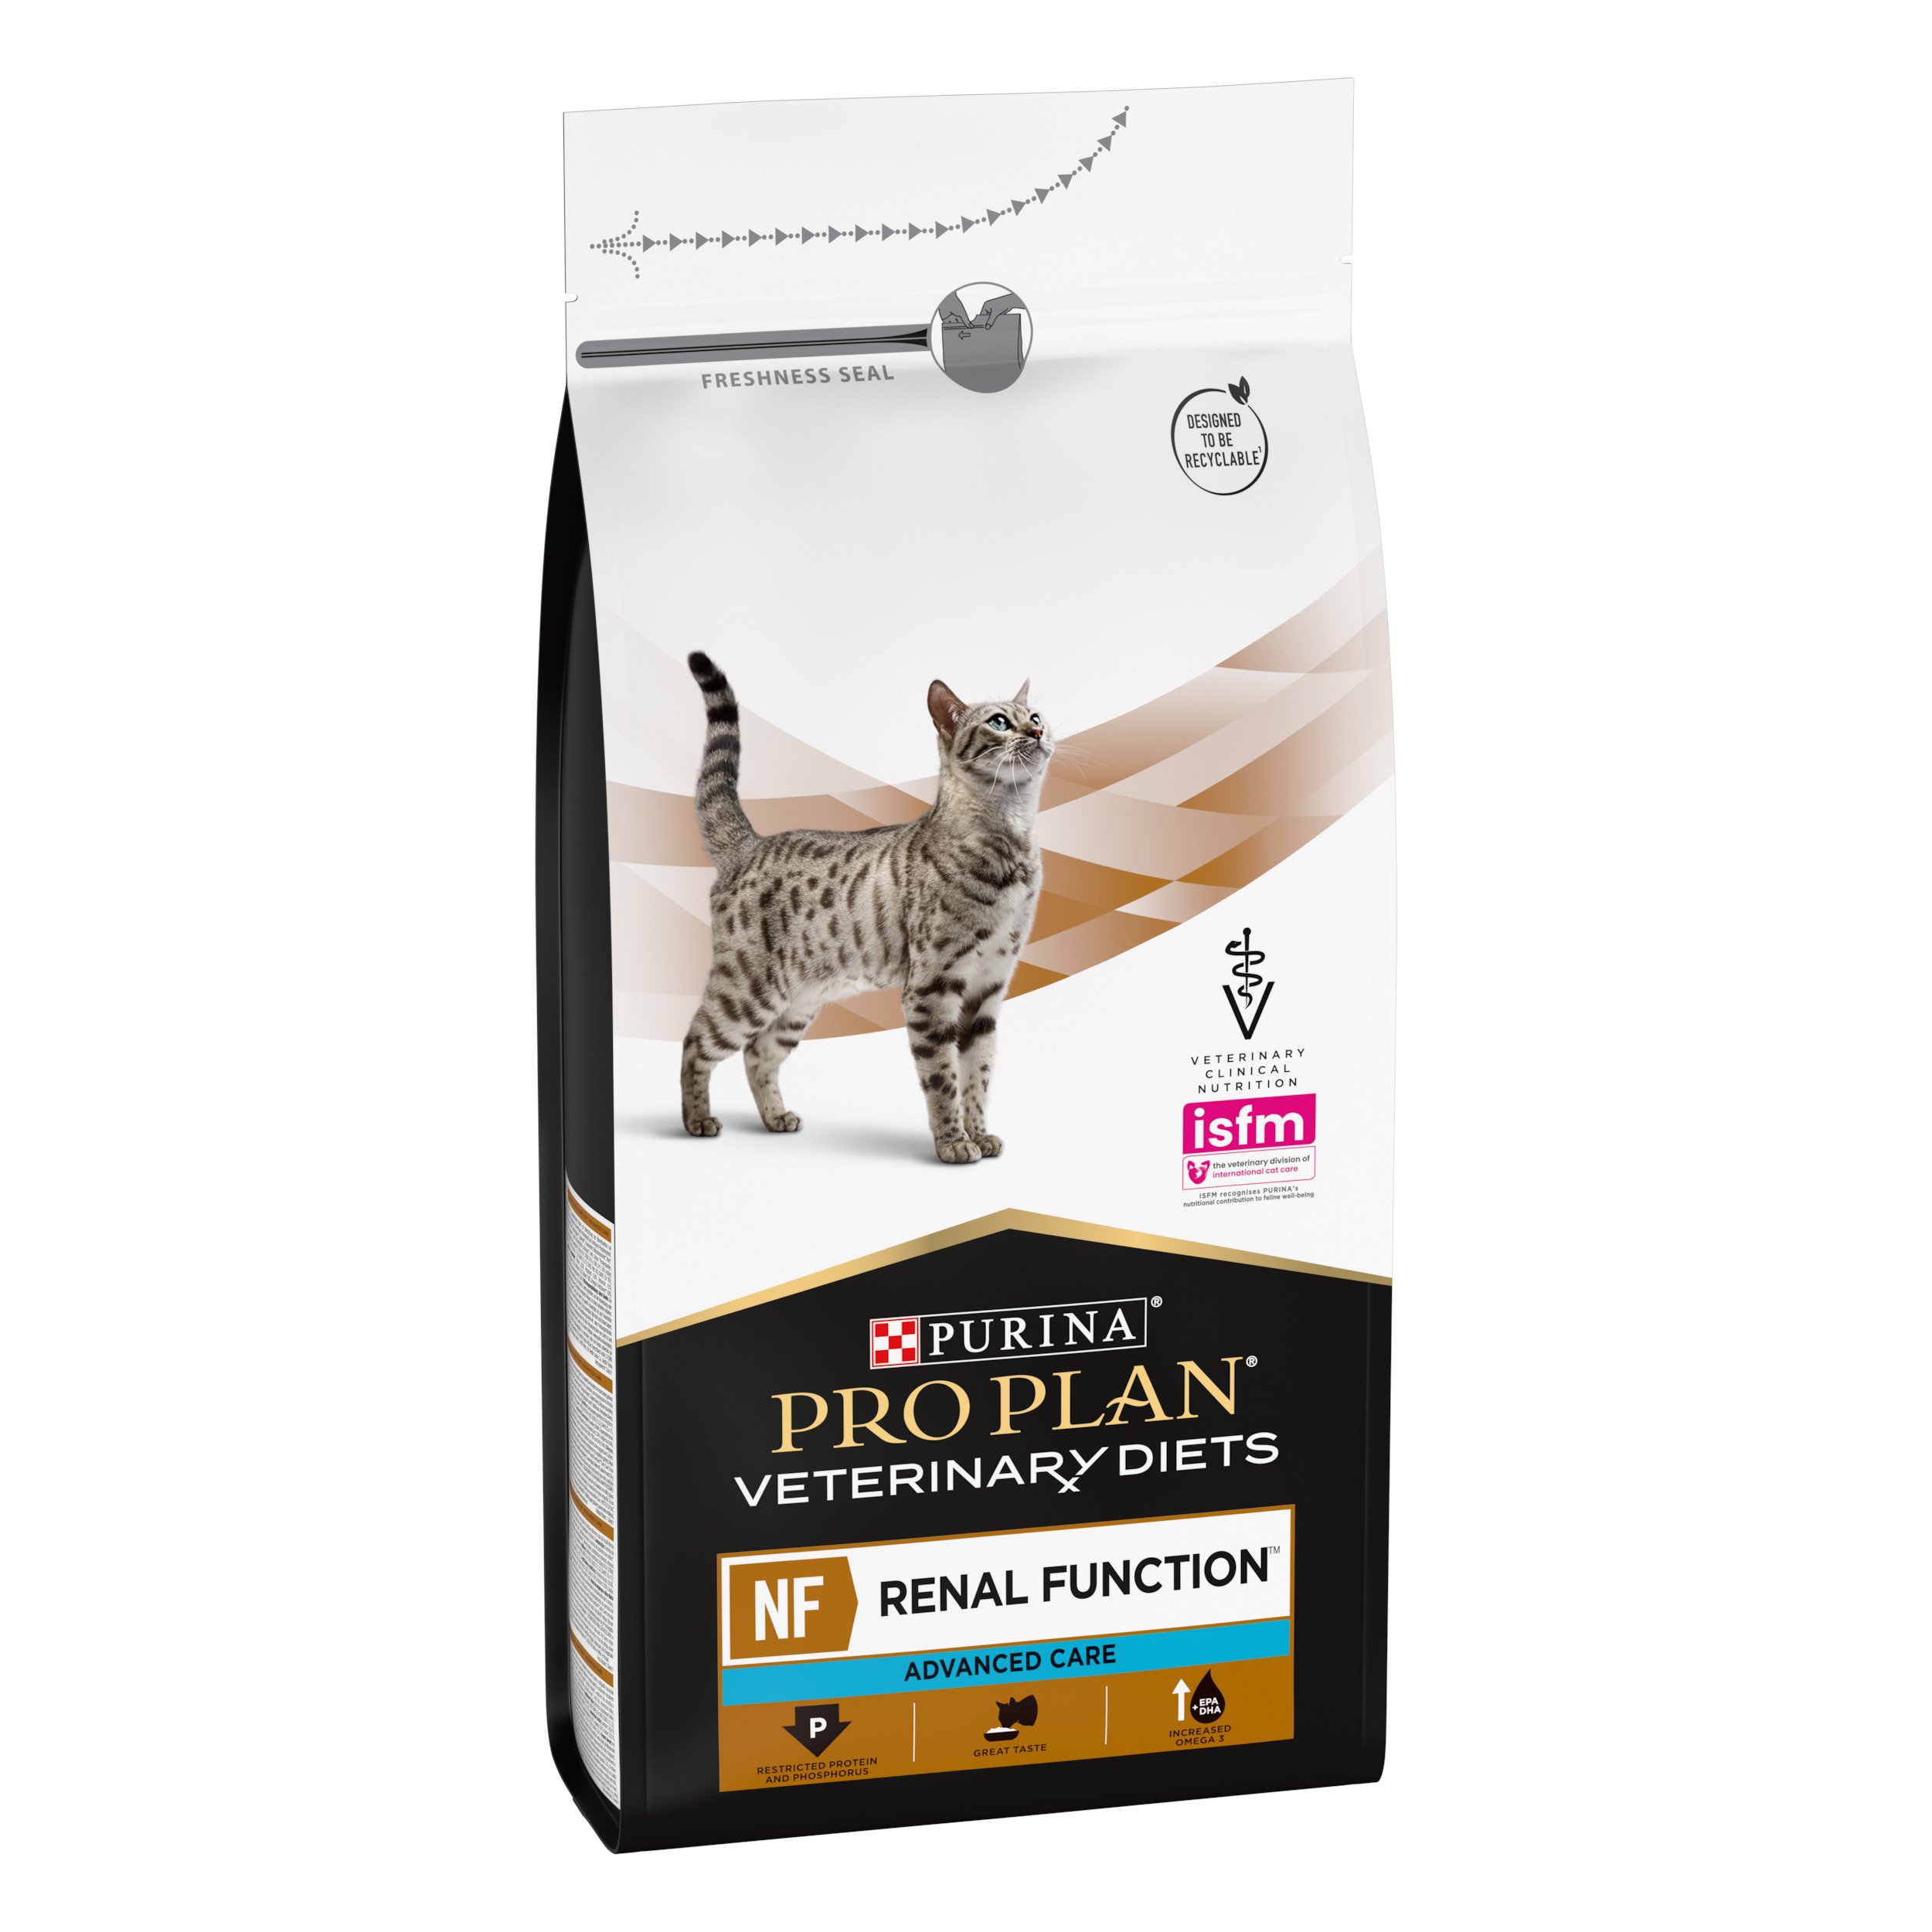 Сухой корм для котов при заболеваниях почек Purina Pro Plan Veterinary Diets NF Renal Function, 1,5 кг (12382830) - фото 3